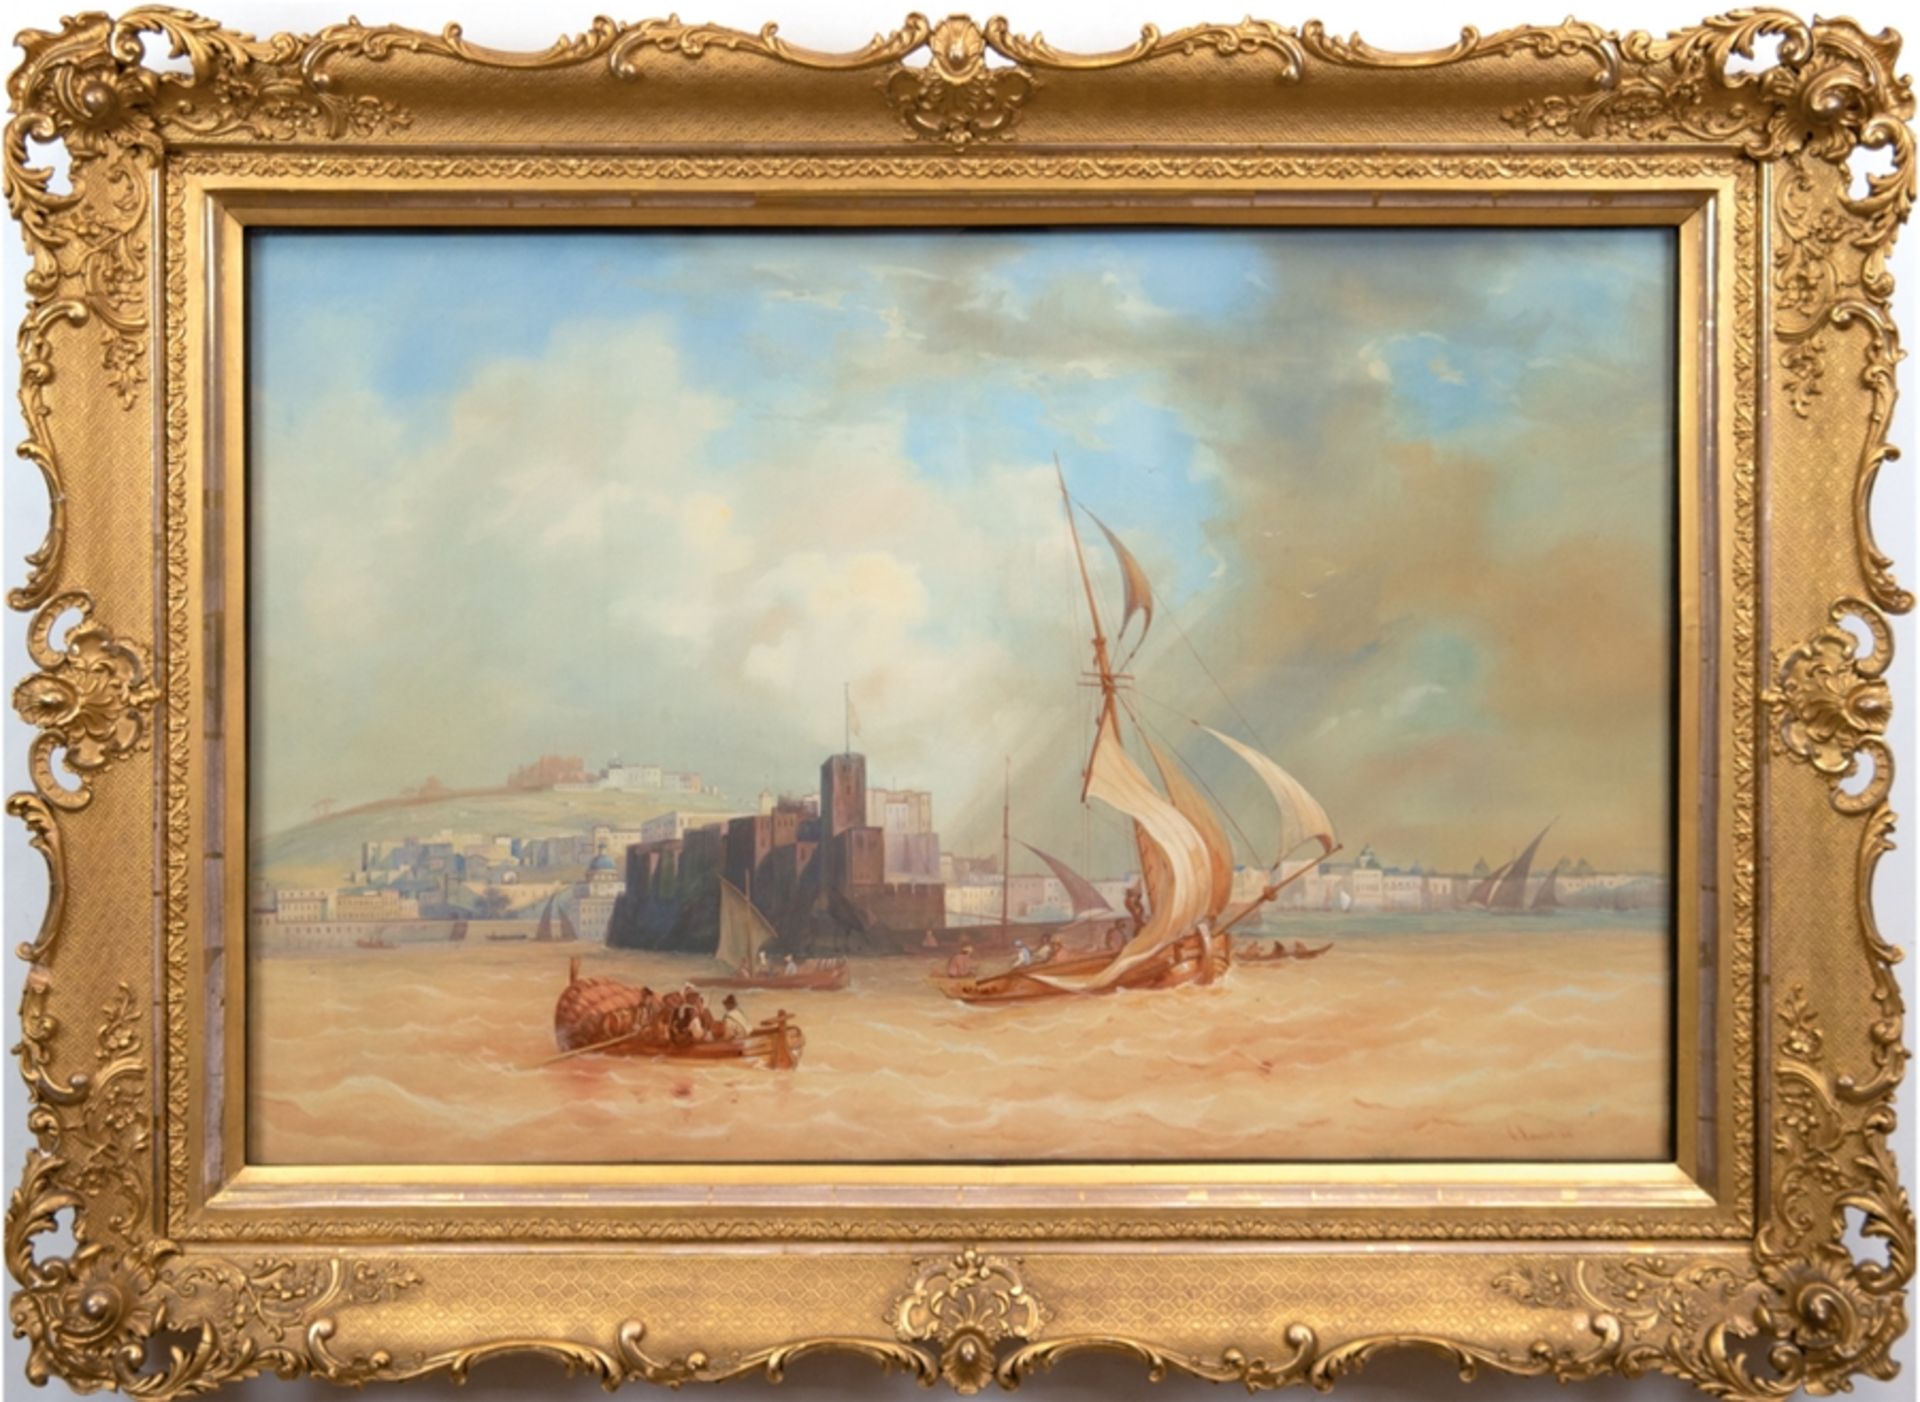 Laeisz, Carl Martin (1803 Hamburg-18654 ebenda) "Neapel am Meer", Aquarell/Papier, sign. und dat. 1